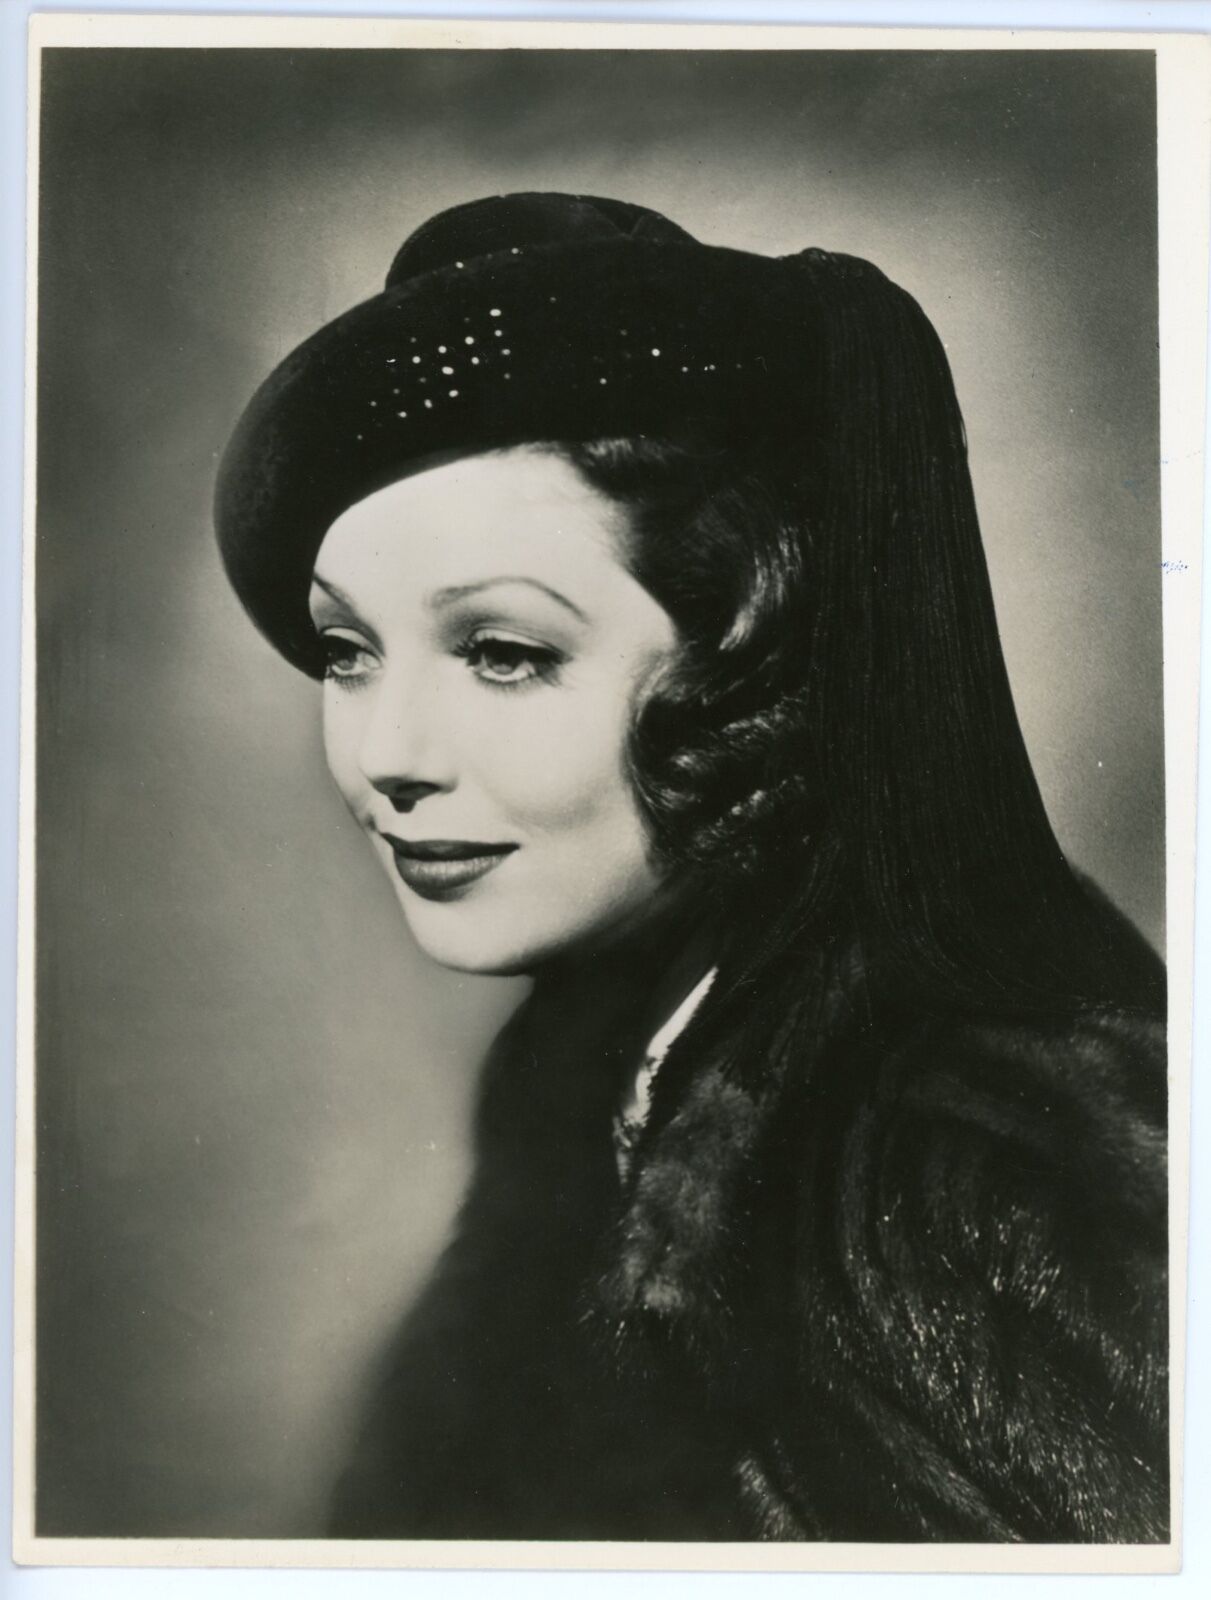 LORETTA YOUNG – BEAUTIFUL PORTRAIT – ORIGINAL 1940s PRESS PHOTO – NEAR MINT